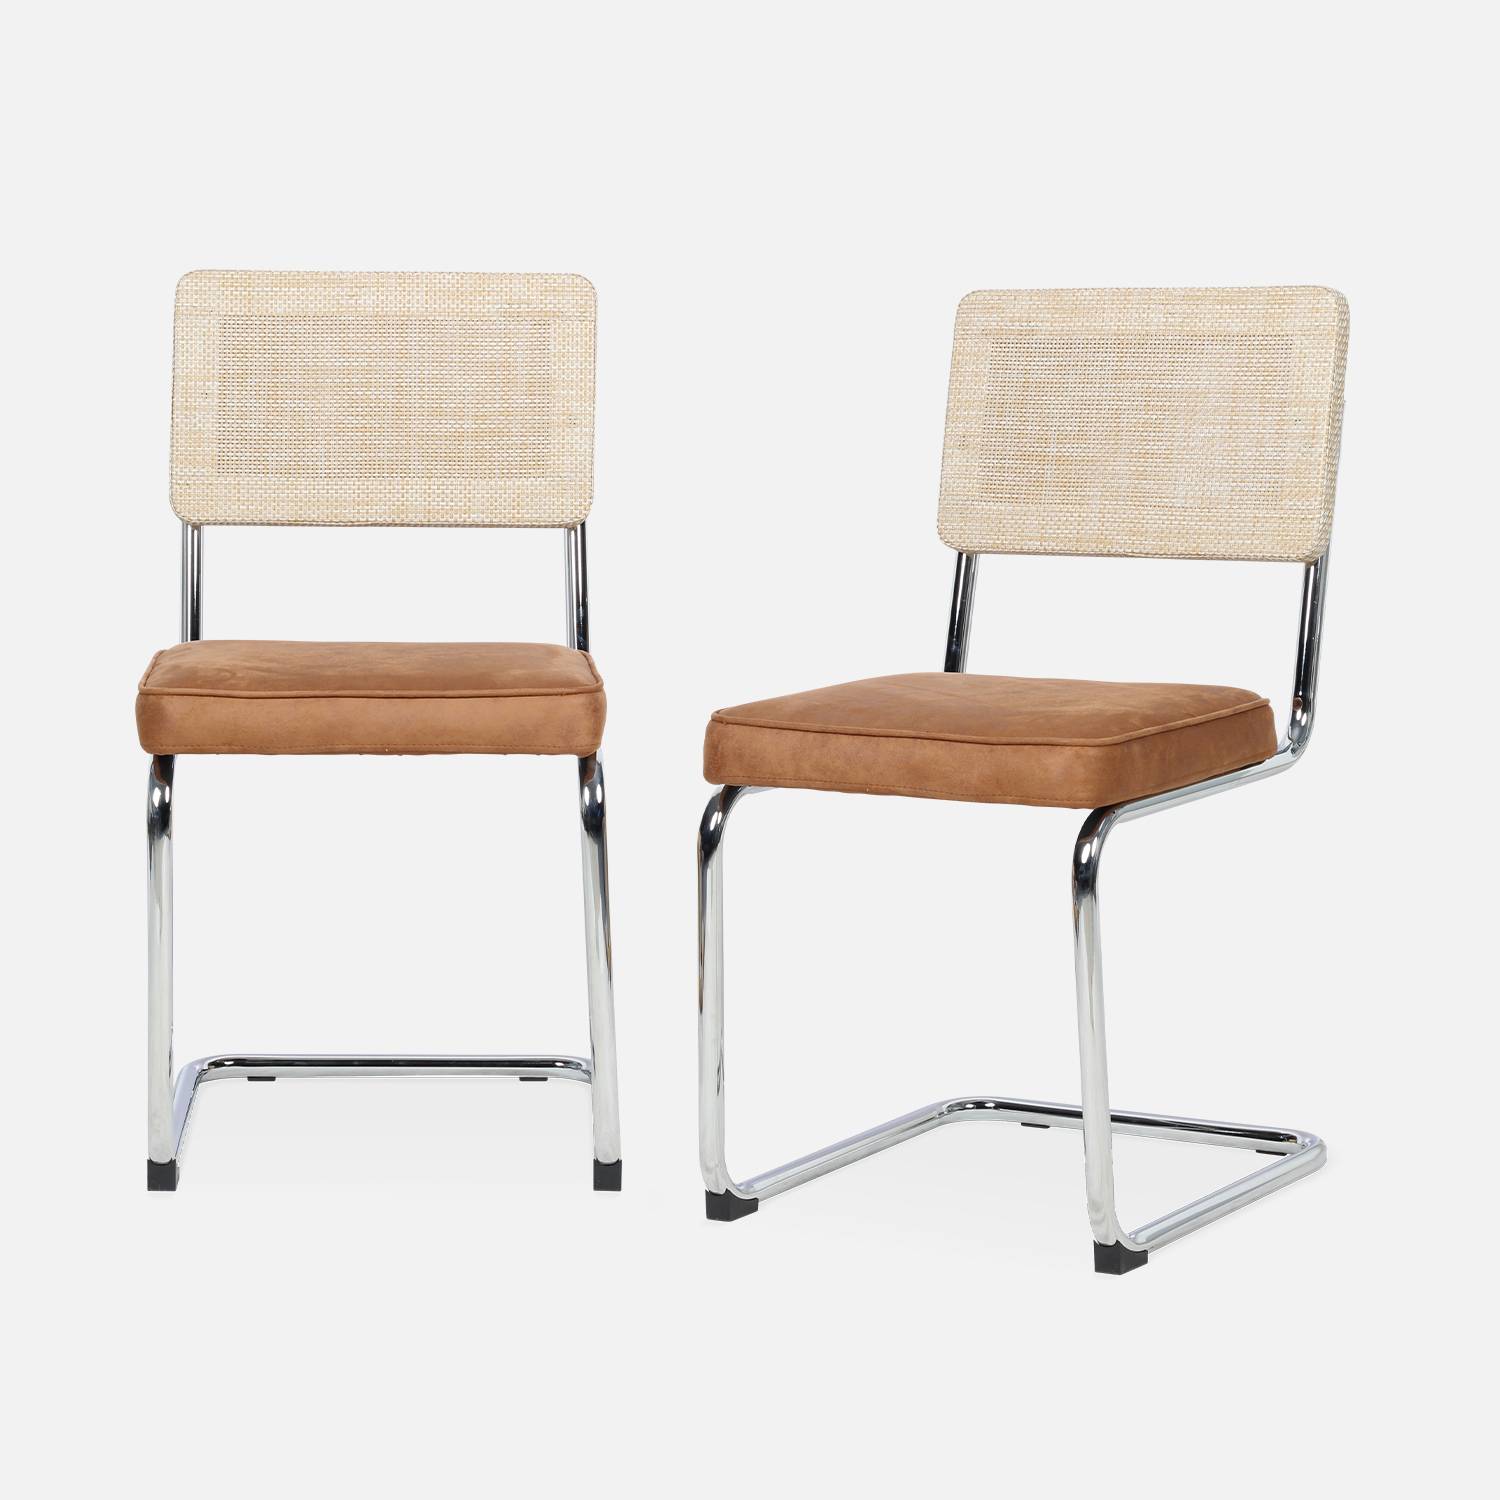 2 sillas cantilever, tela marrón claro y resina  | sweeek